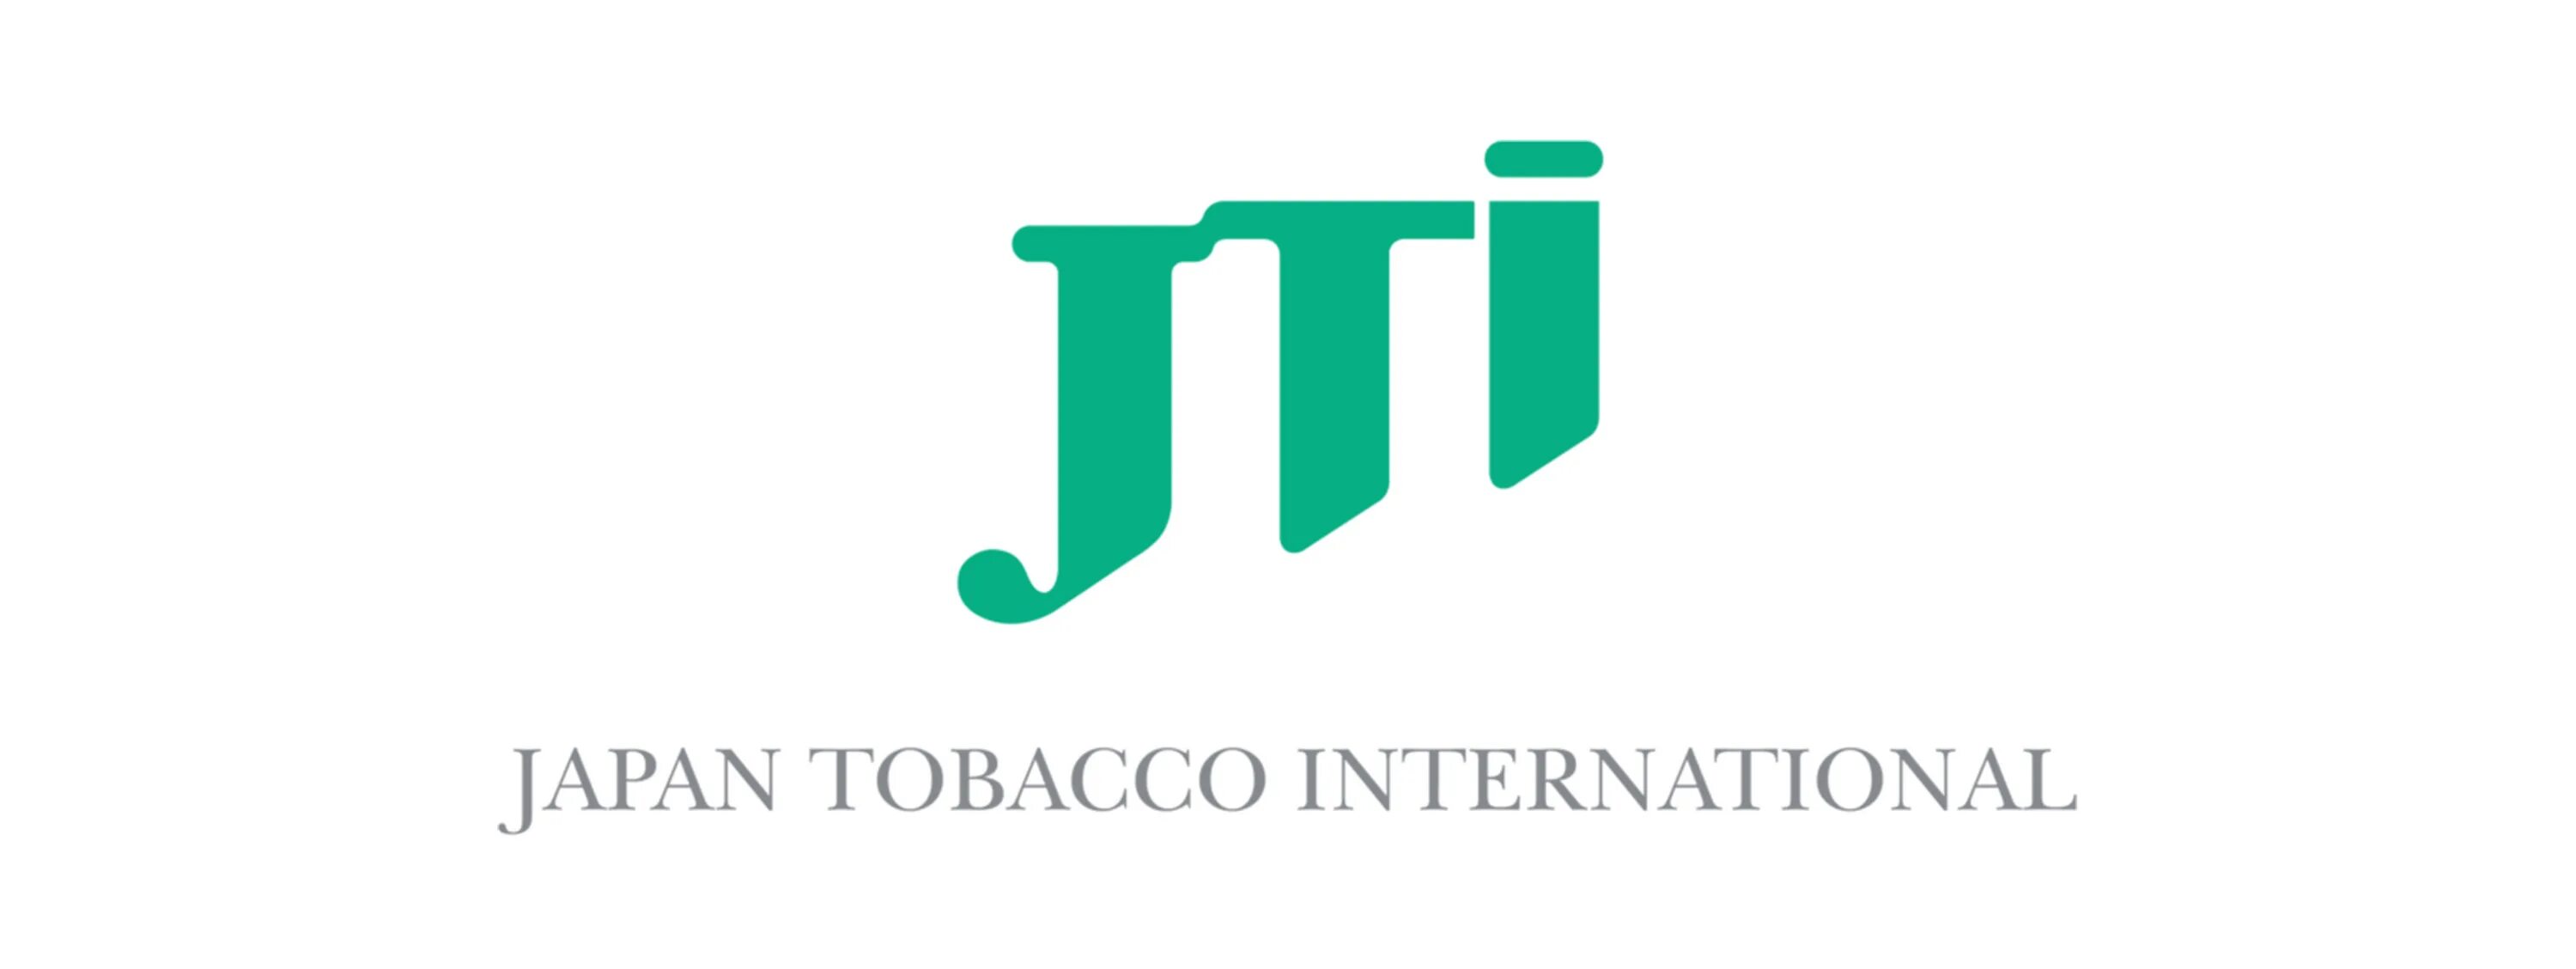 Jti табачная компания. Компания JTI. JTI Россия. Japan Tobacco International. Табачная Международная компания JTI.